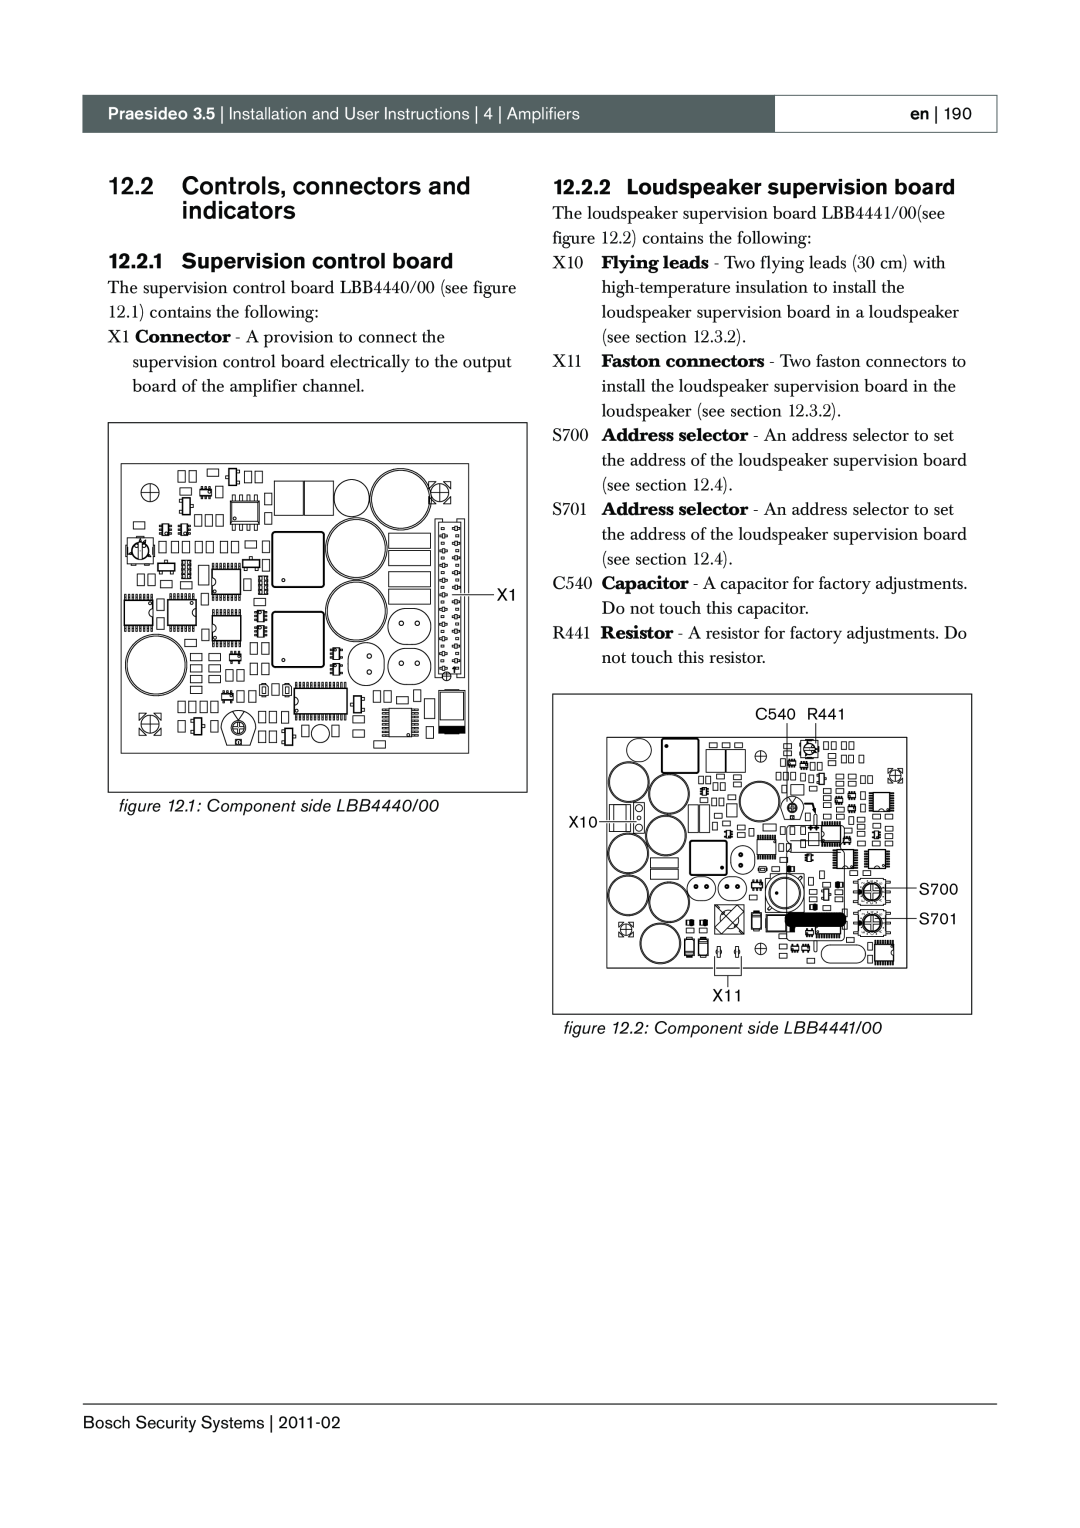 Bosch Appliances 3.5 12.2Controls, connectors and indicators, Supervision control board, Loudspeaker supervision board 